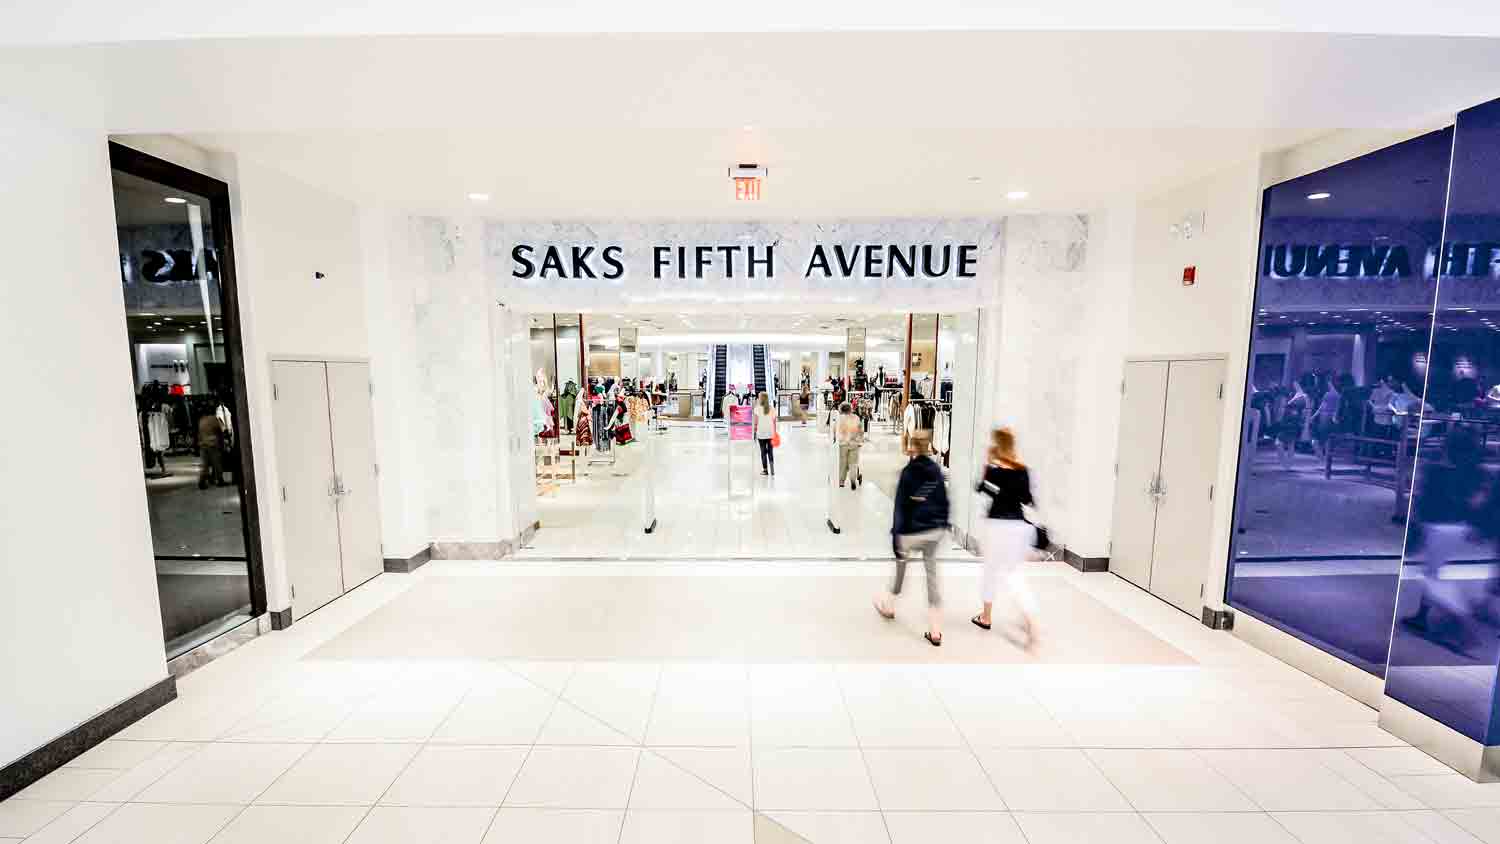 Indianapolis - Circa April 2018: Saks Fifth Avenue Mall Location